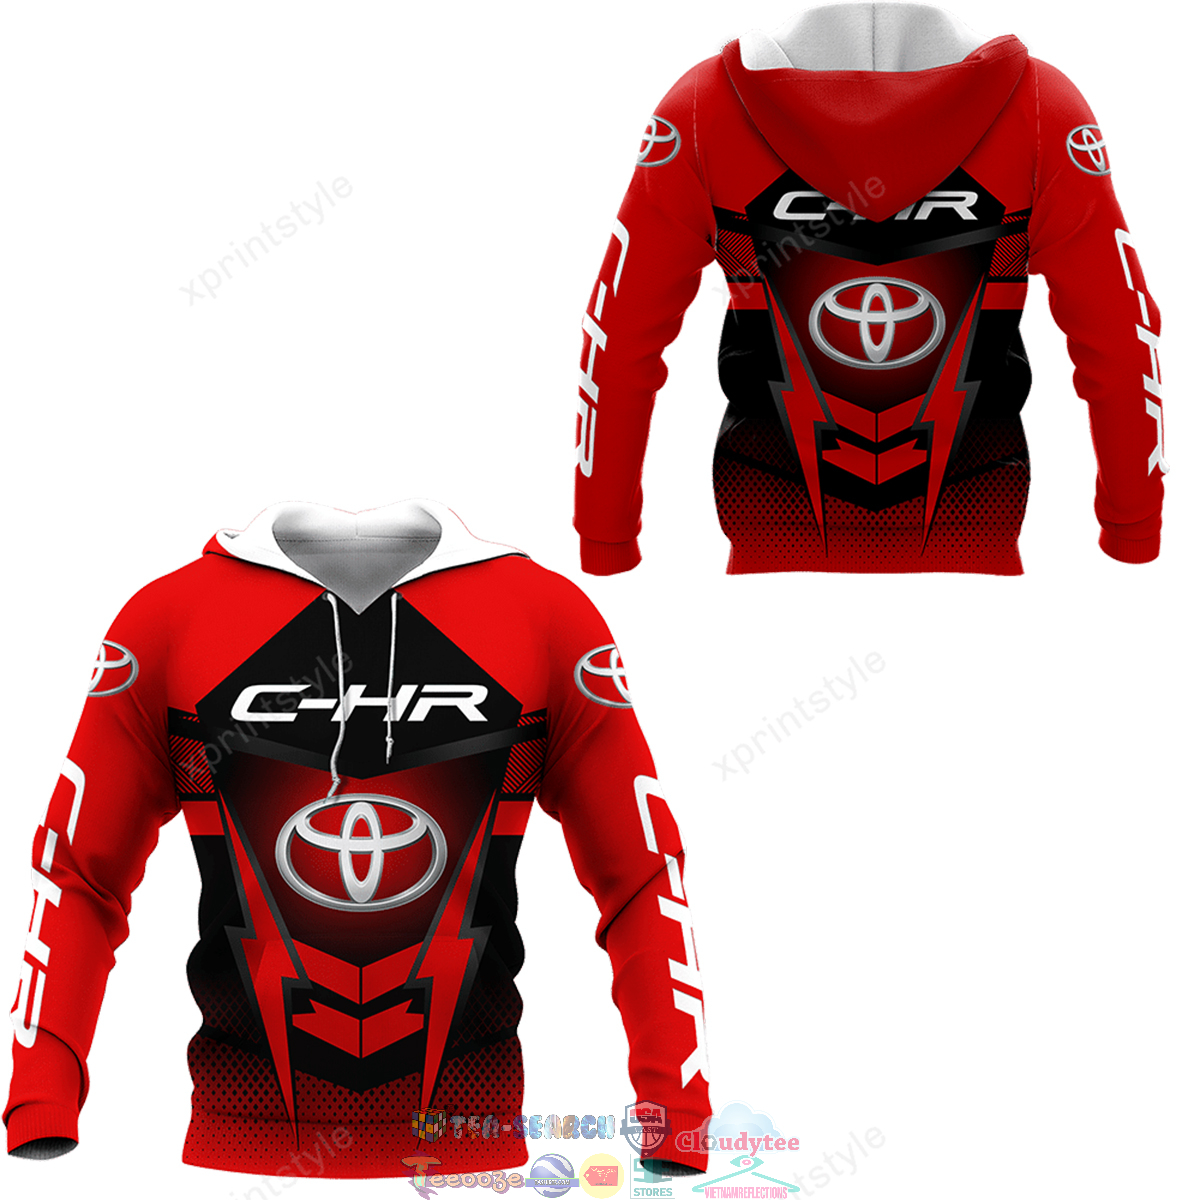 Toyota C-HR ver 5 3D hoodie and t-shirt – Saleoff